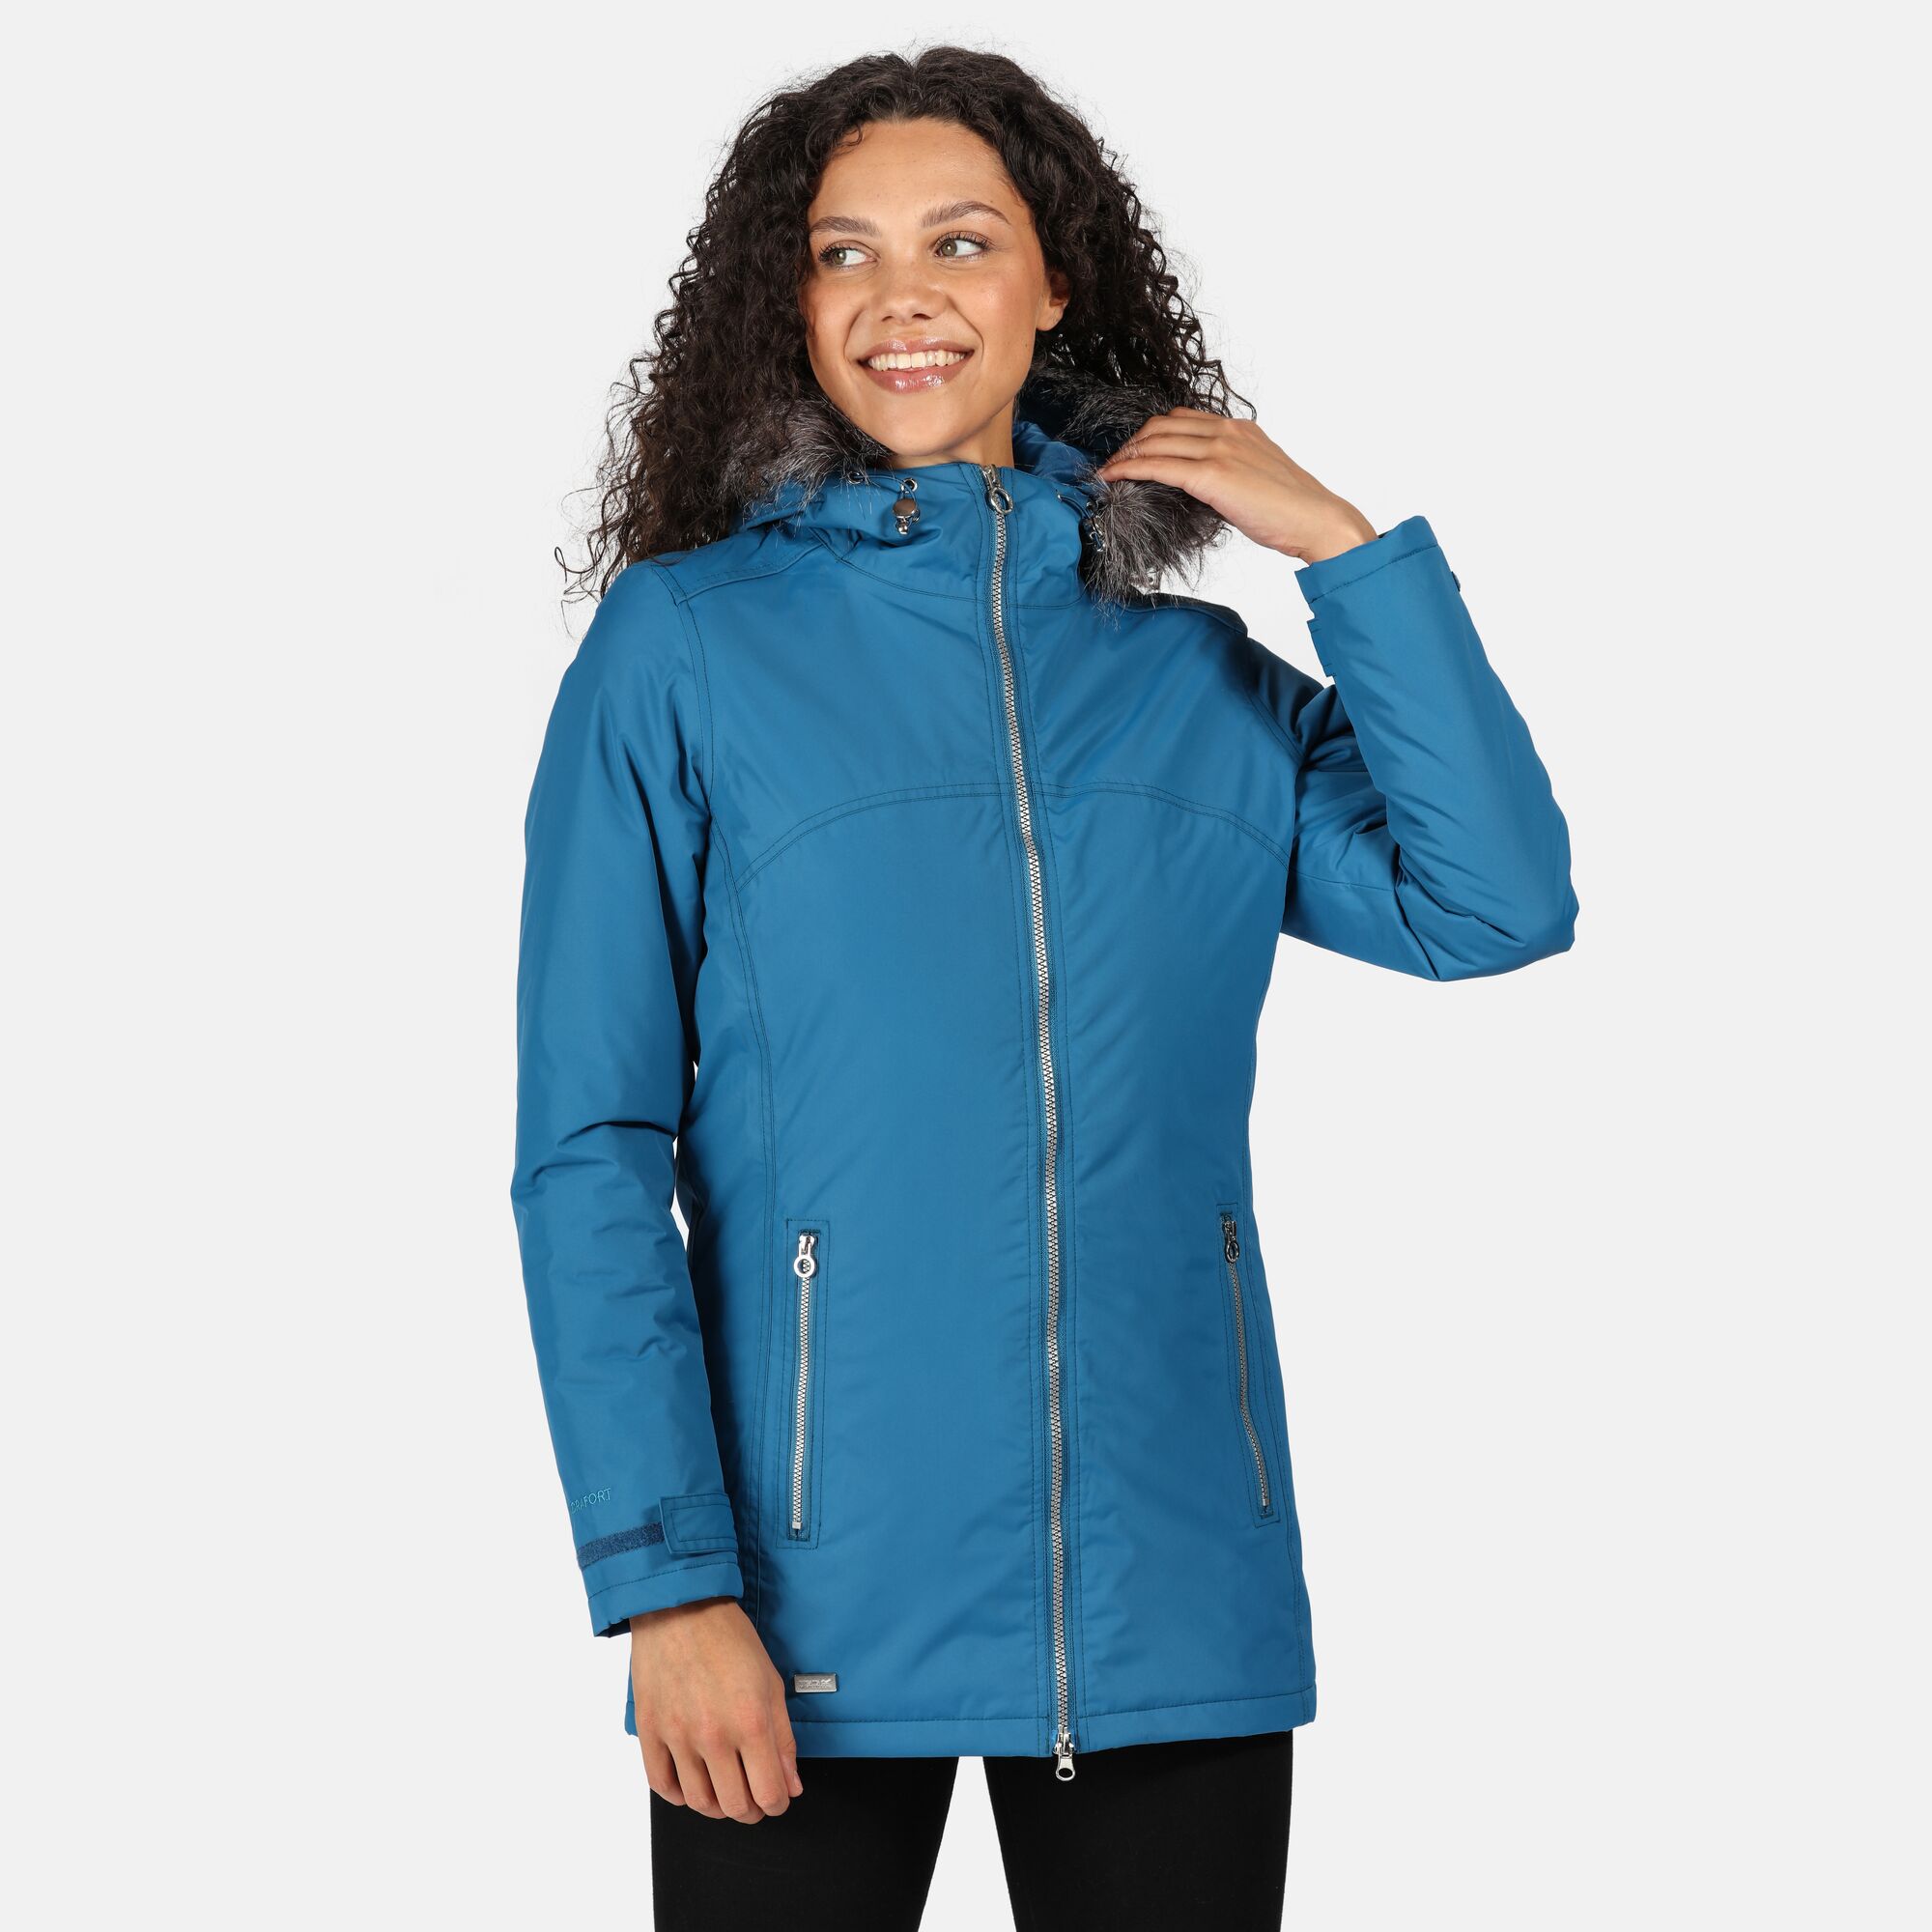 Regatta Myla Womens Jacket Waterproof Insulated Coat | eBay